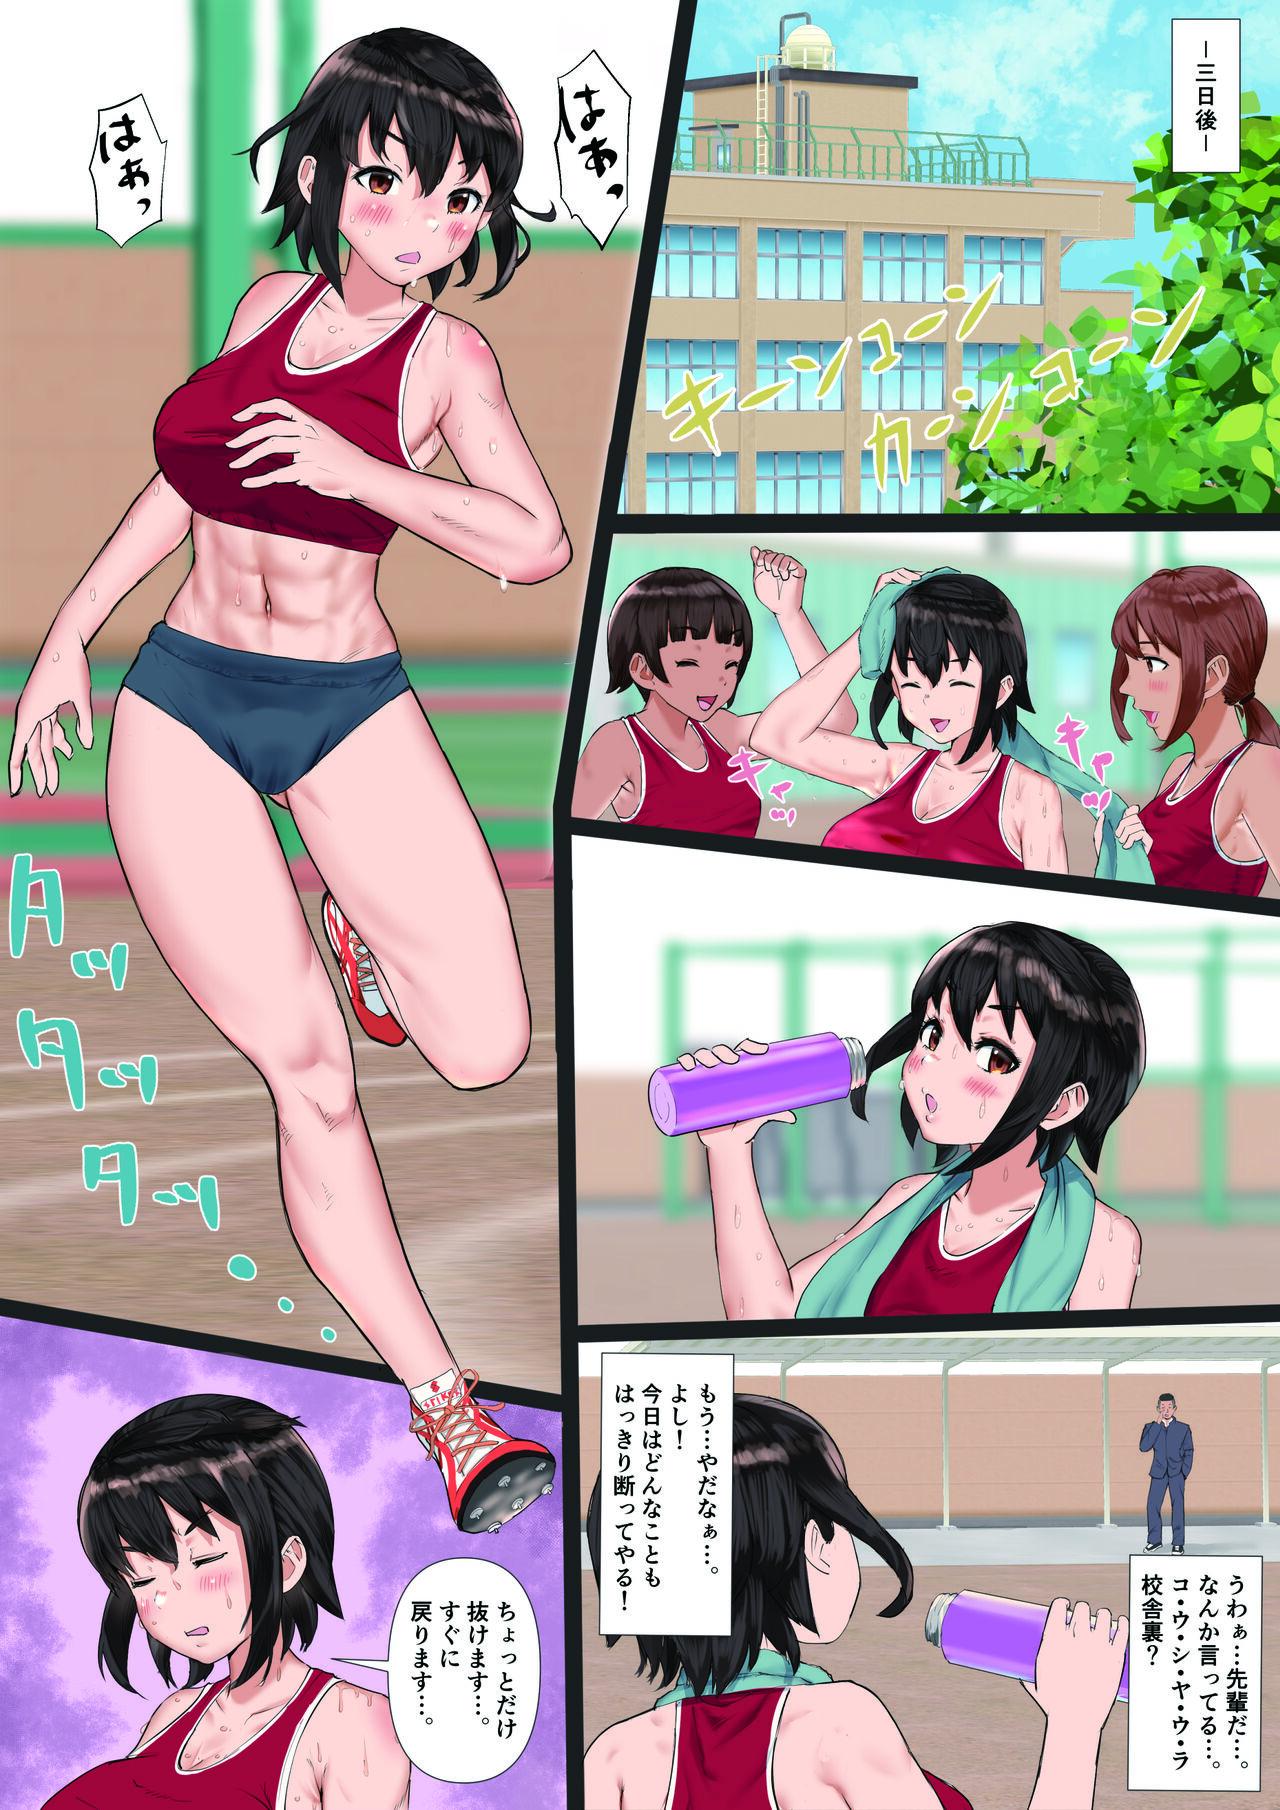 A Girlfriend From The Track And Field Club Turned Into A Senior's Woman-Rikujoubu no Kanojo ga, Senpai no Onna ni Natteita Nante. 66